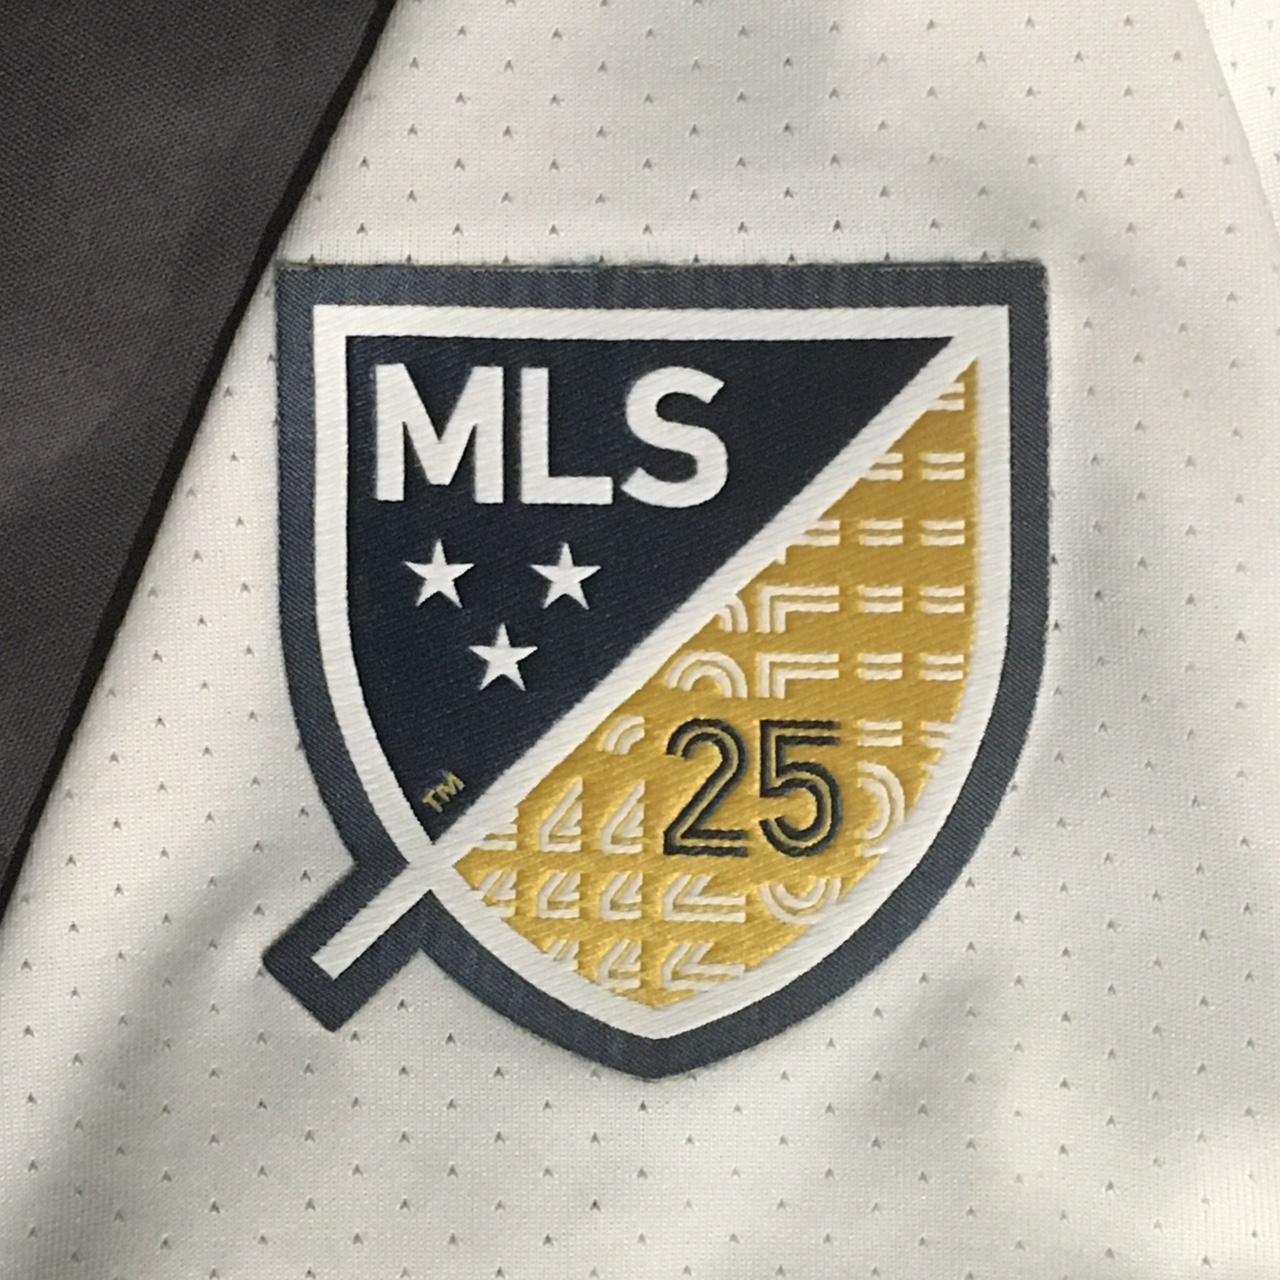 Adidas Delgado La Galaxy Home Authentic Jersey 22/23 w/ MLS Patches (White) Size L